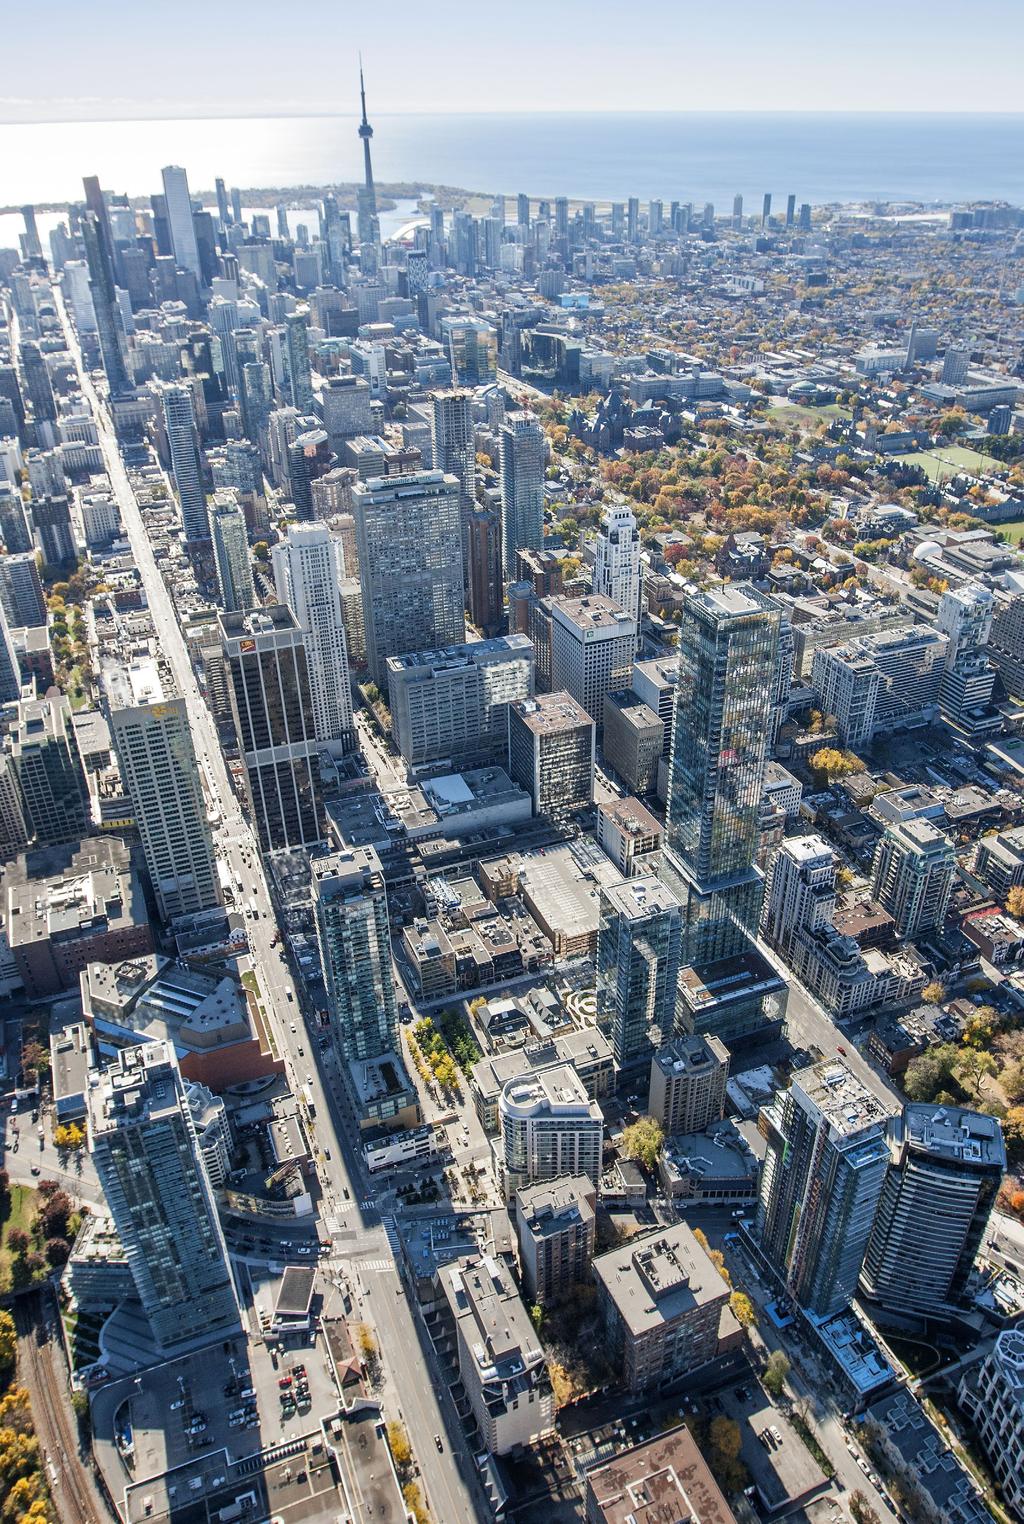 City of Toronto 6.0 million POPULATION IN THE GREATER TORONTO AREA 2.85 million 93 Bloor Street West POPULATION IN THE CITY OF TORONTO ST T.